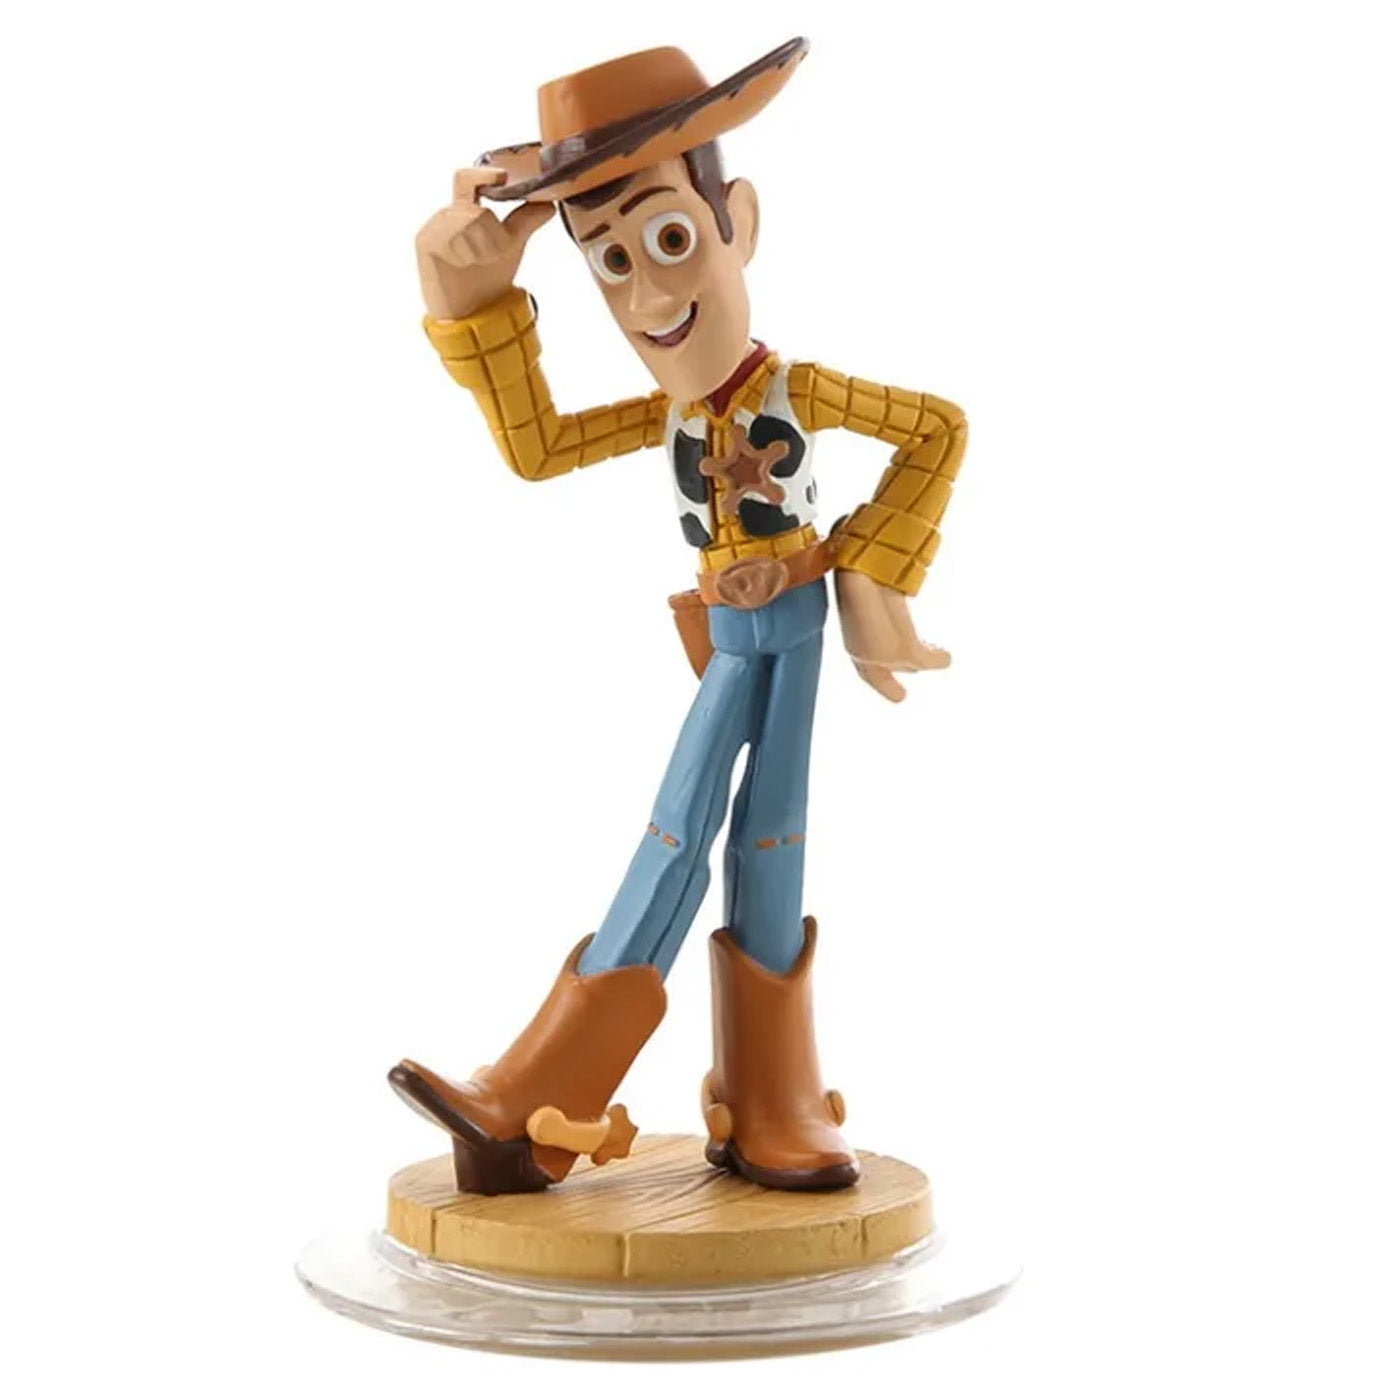 Disney Infinity 1.0 Character: Woody